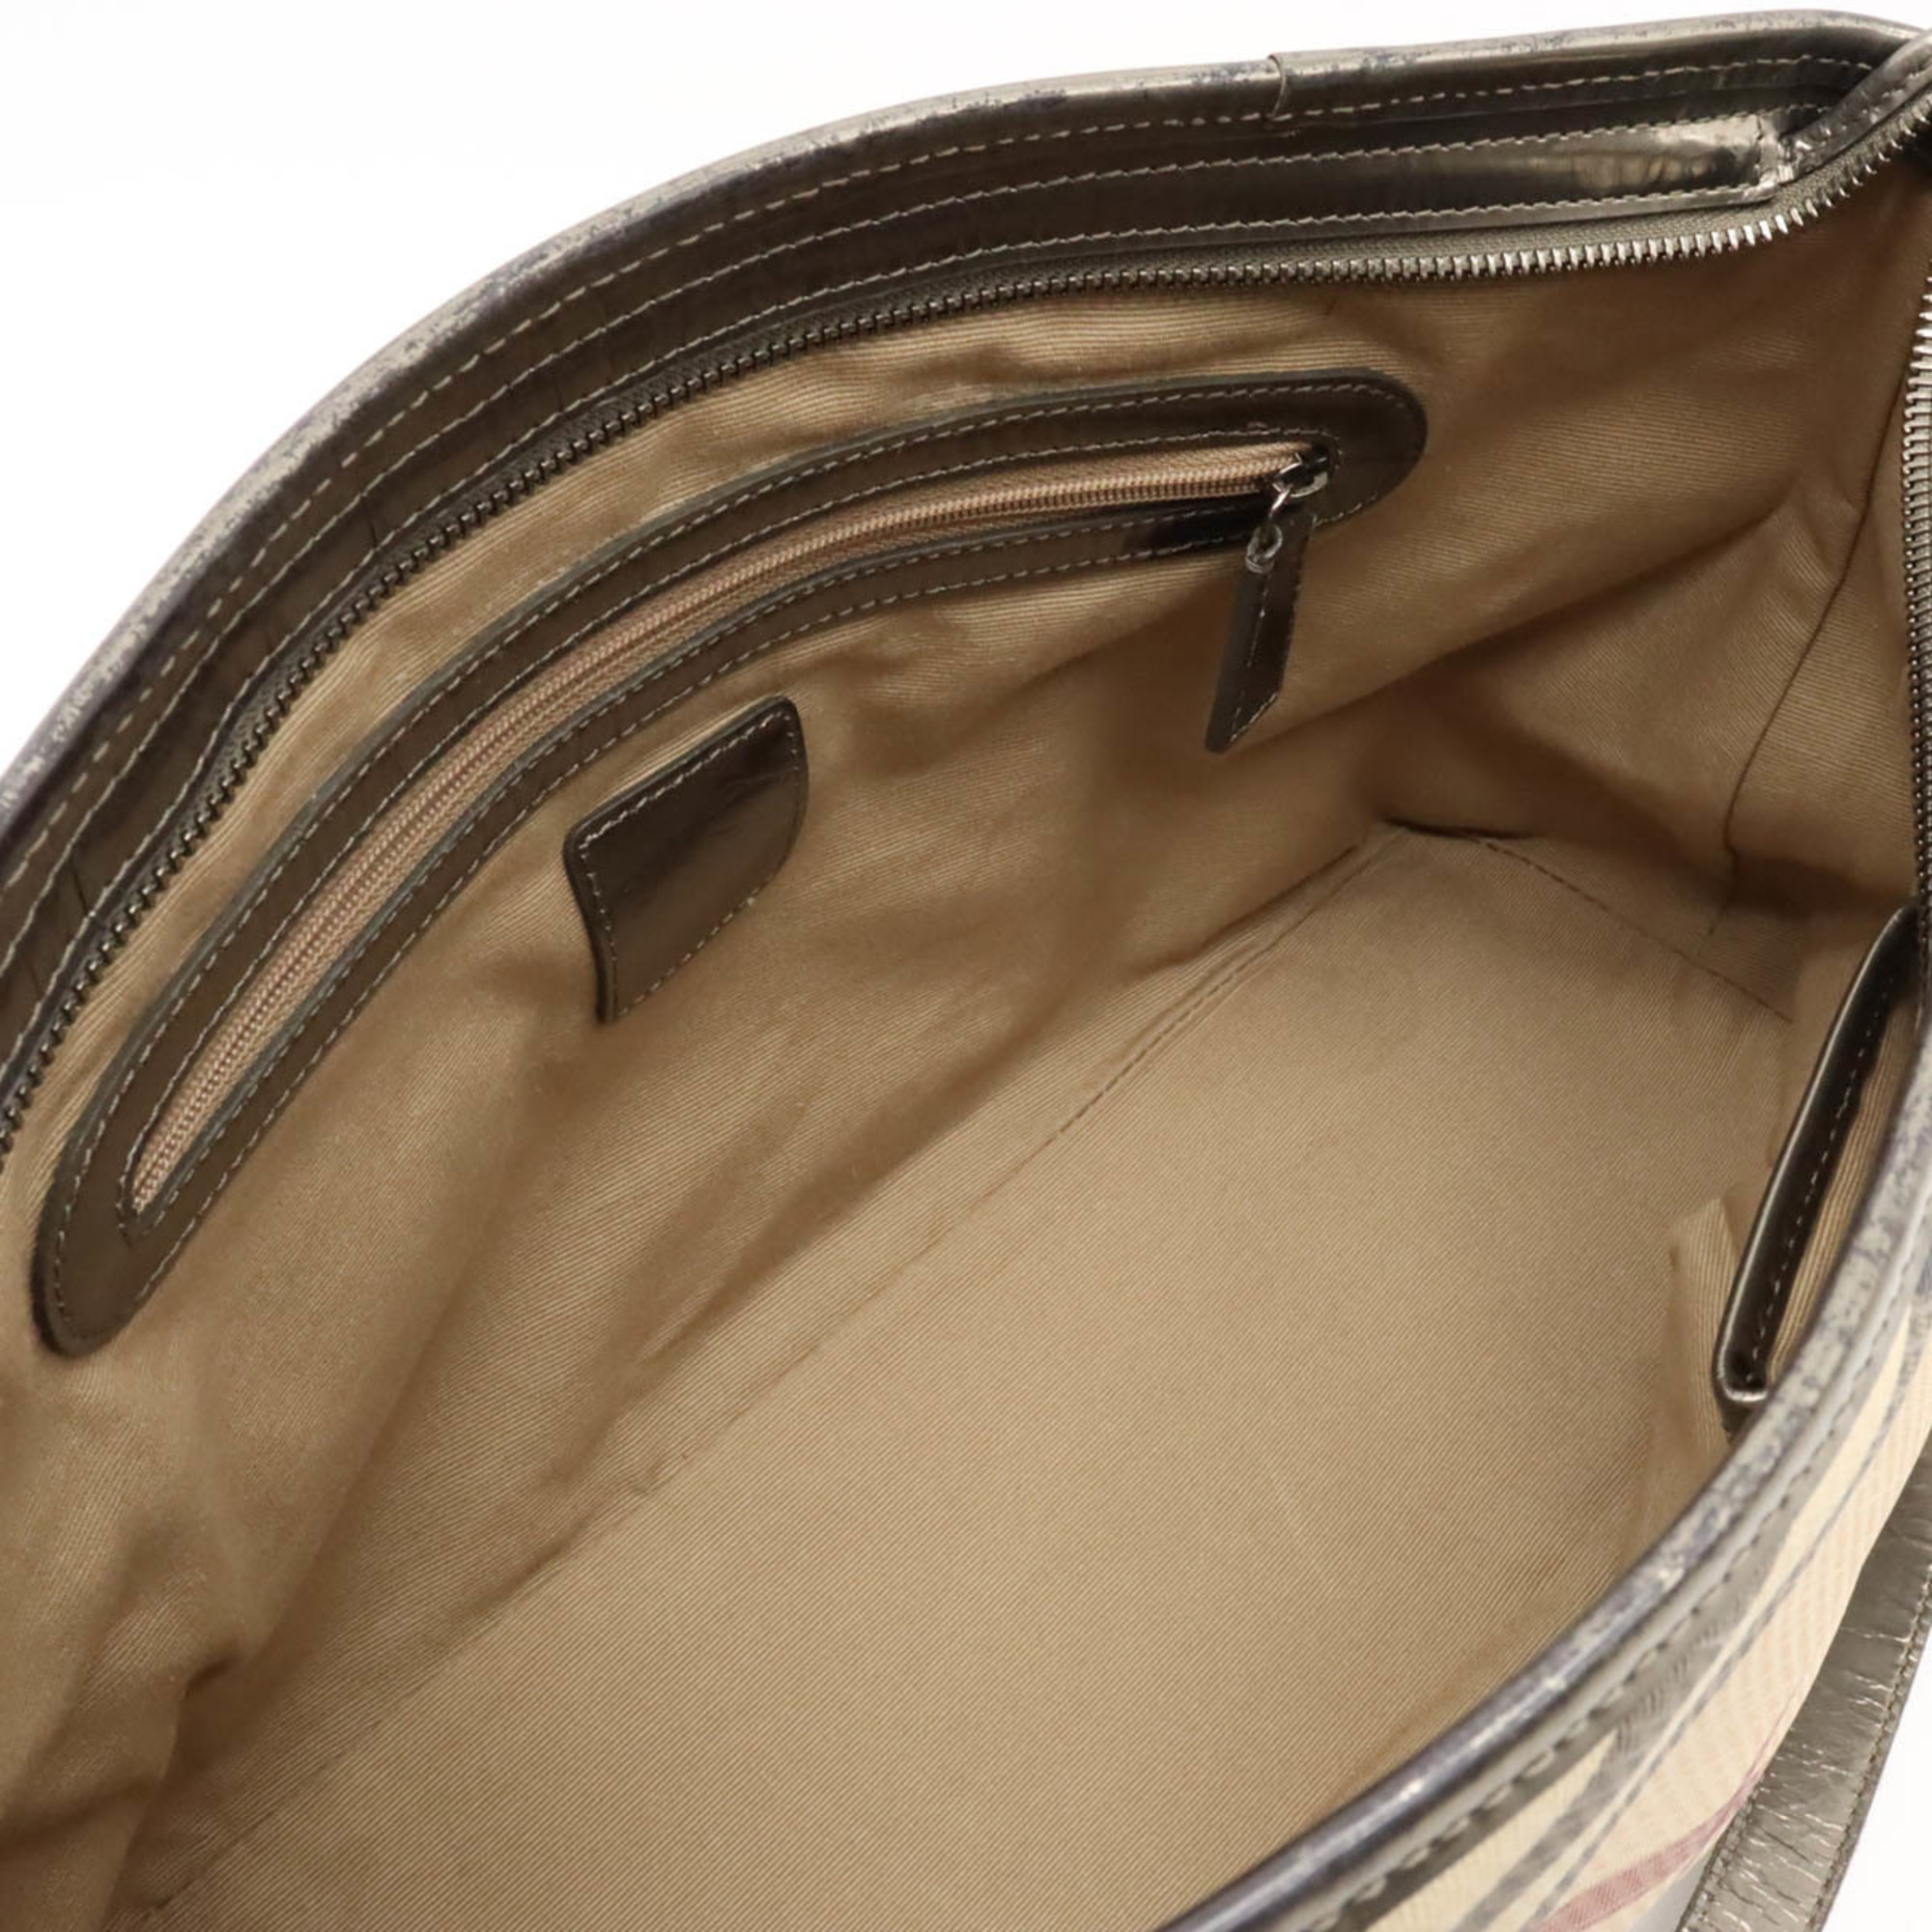 BURBERRY Nova Check Pattern Tote Bag Shoulder PVC Metallic Leather Beige Khaki Gold